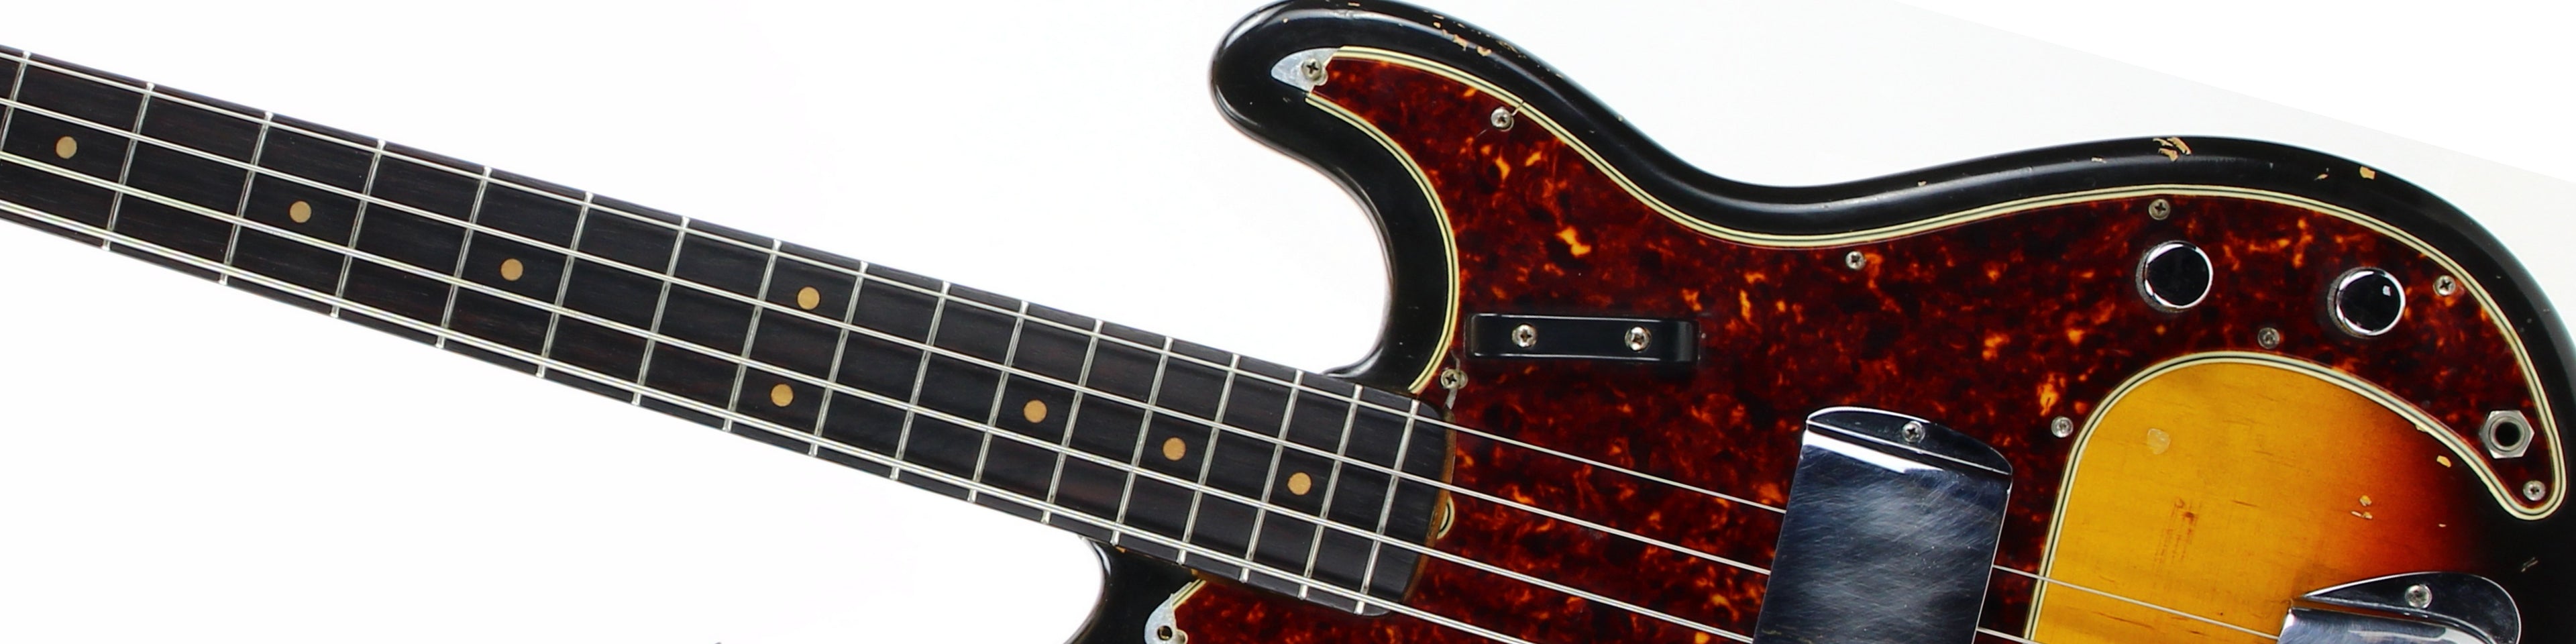 Pre-CBS Fender Precision Bass in Sunburst with Tortoise Pickguard